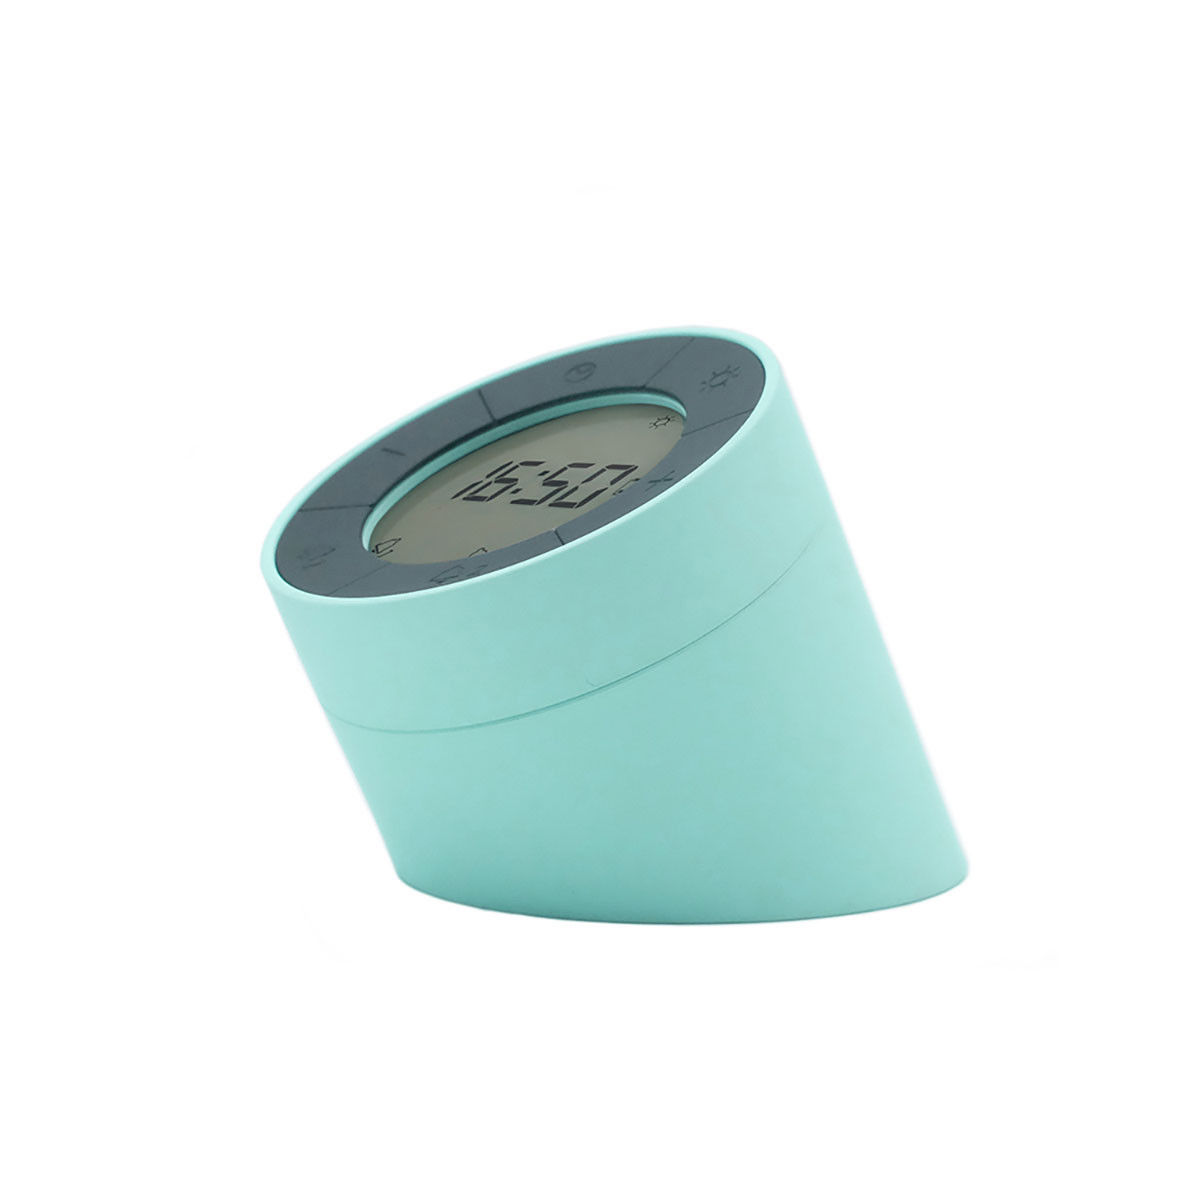  Ceas cu alarma - Digital LED Alarm Clock - Green | Gingko 